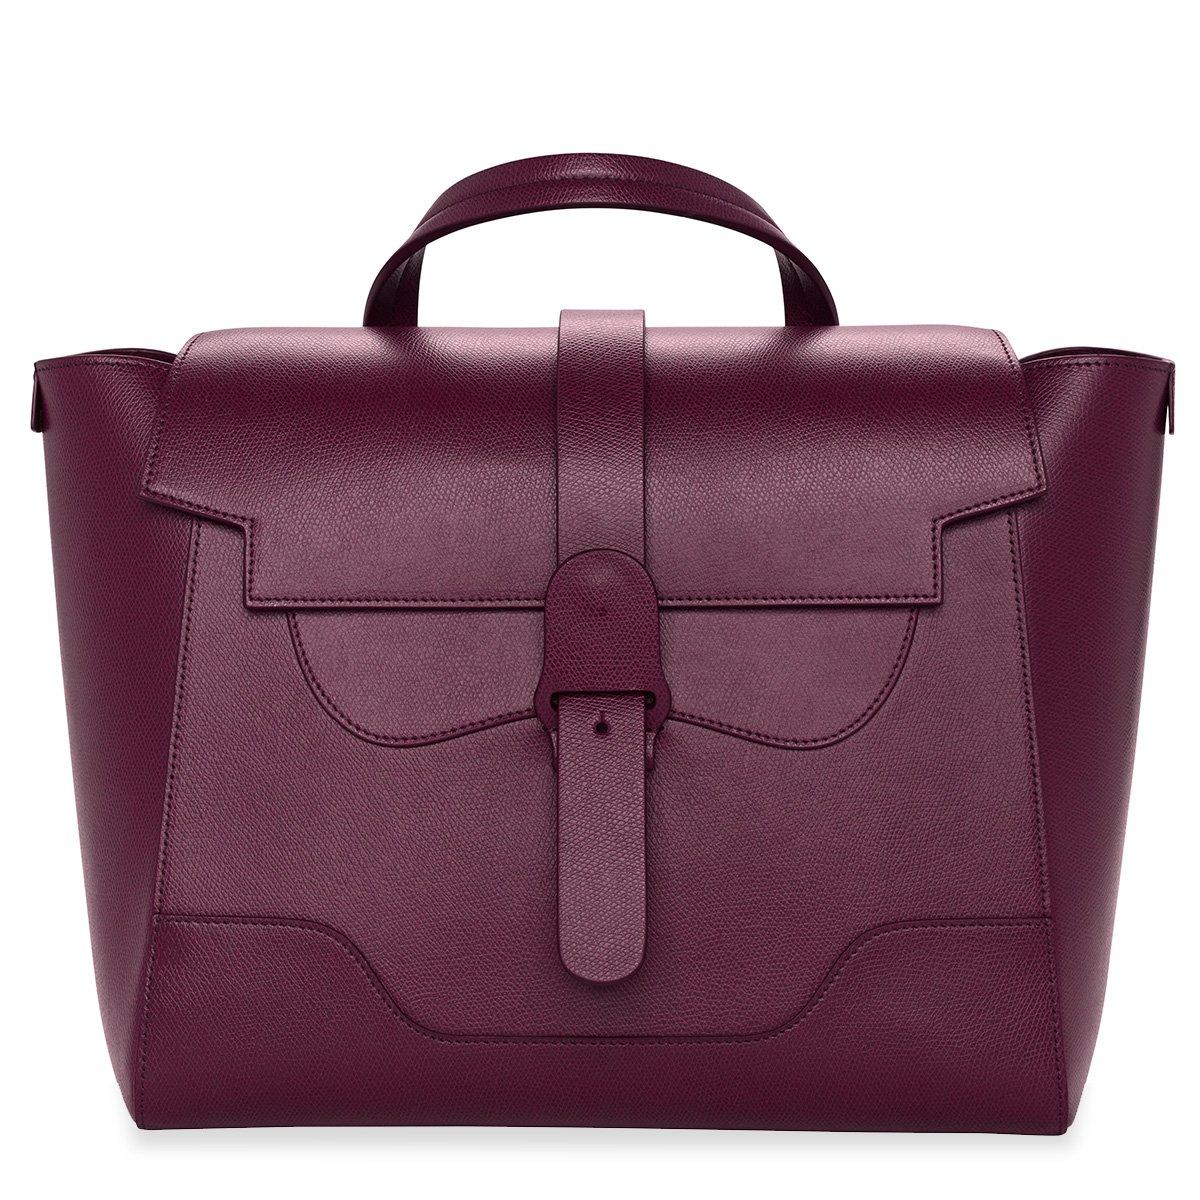 Senreve Suede Maestra Bag in Purple - Lyst